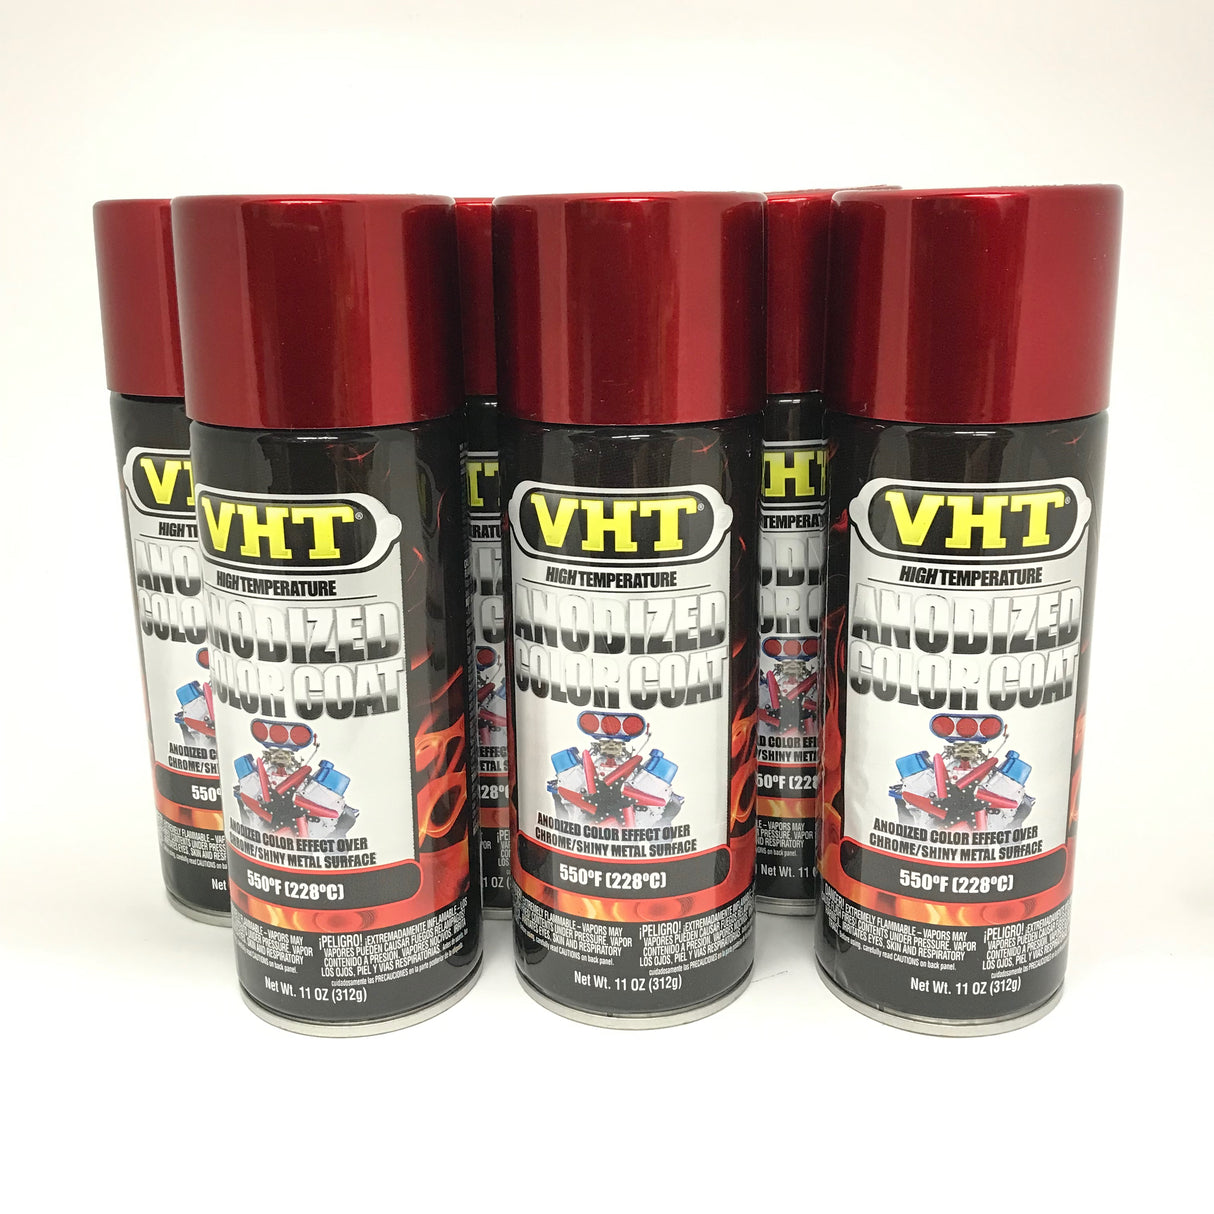 VHT SP450-6 PACK RED Anodized Color Coat - High Heat Coating - 11 oz Aerosol